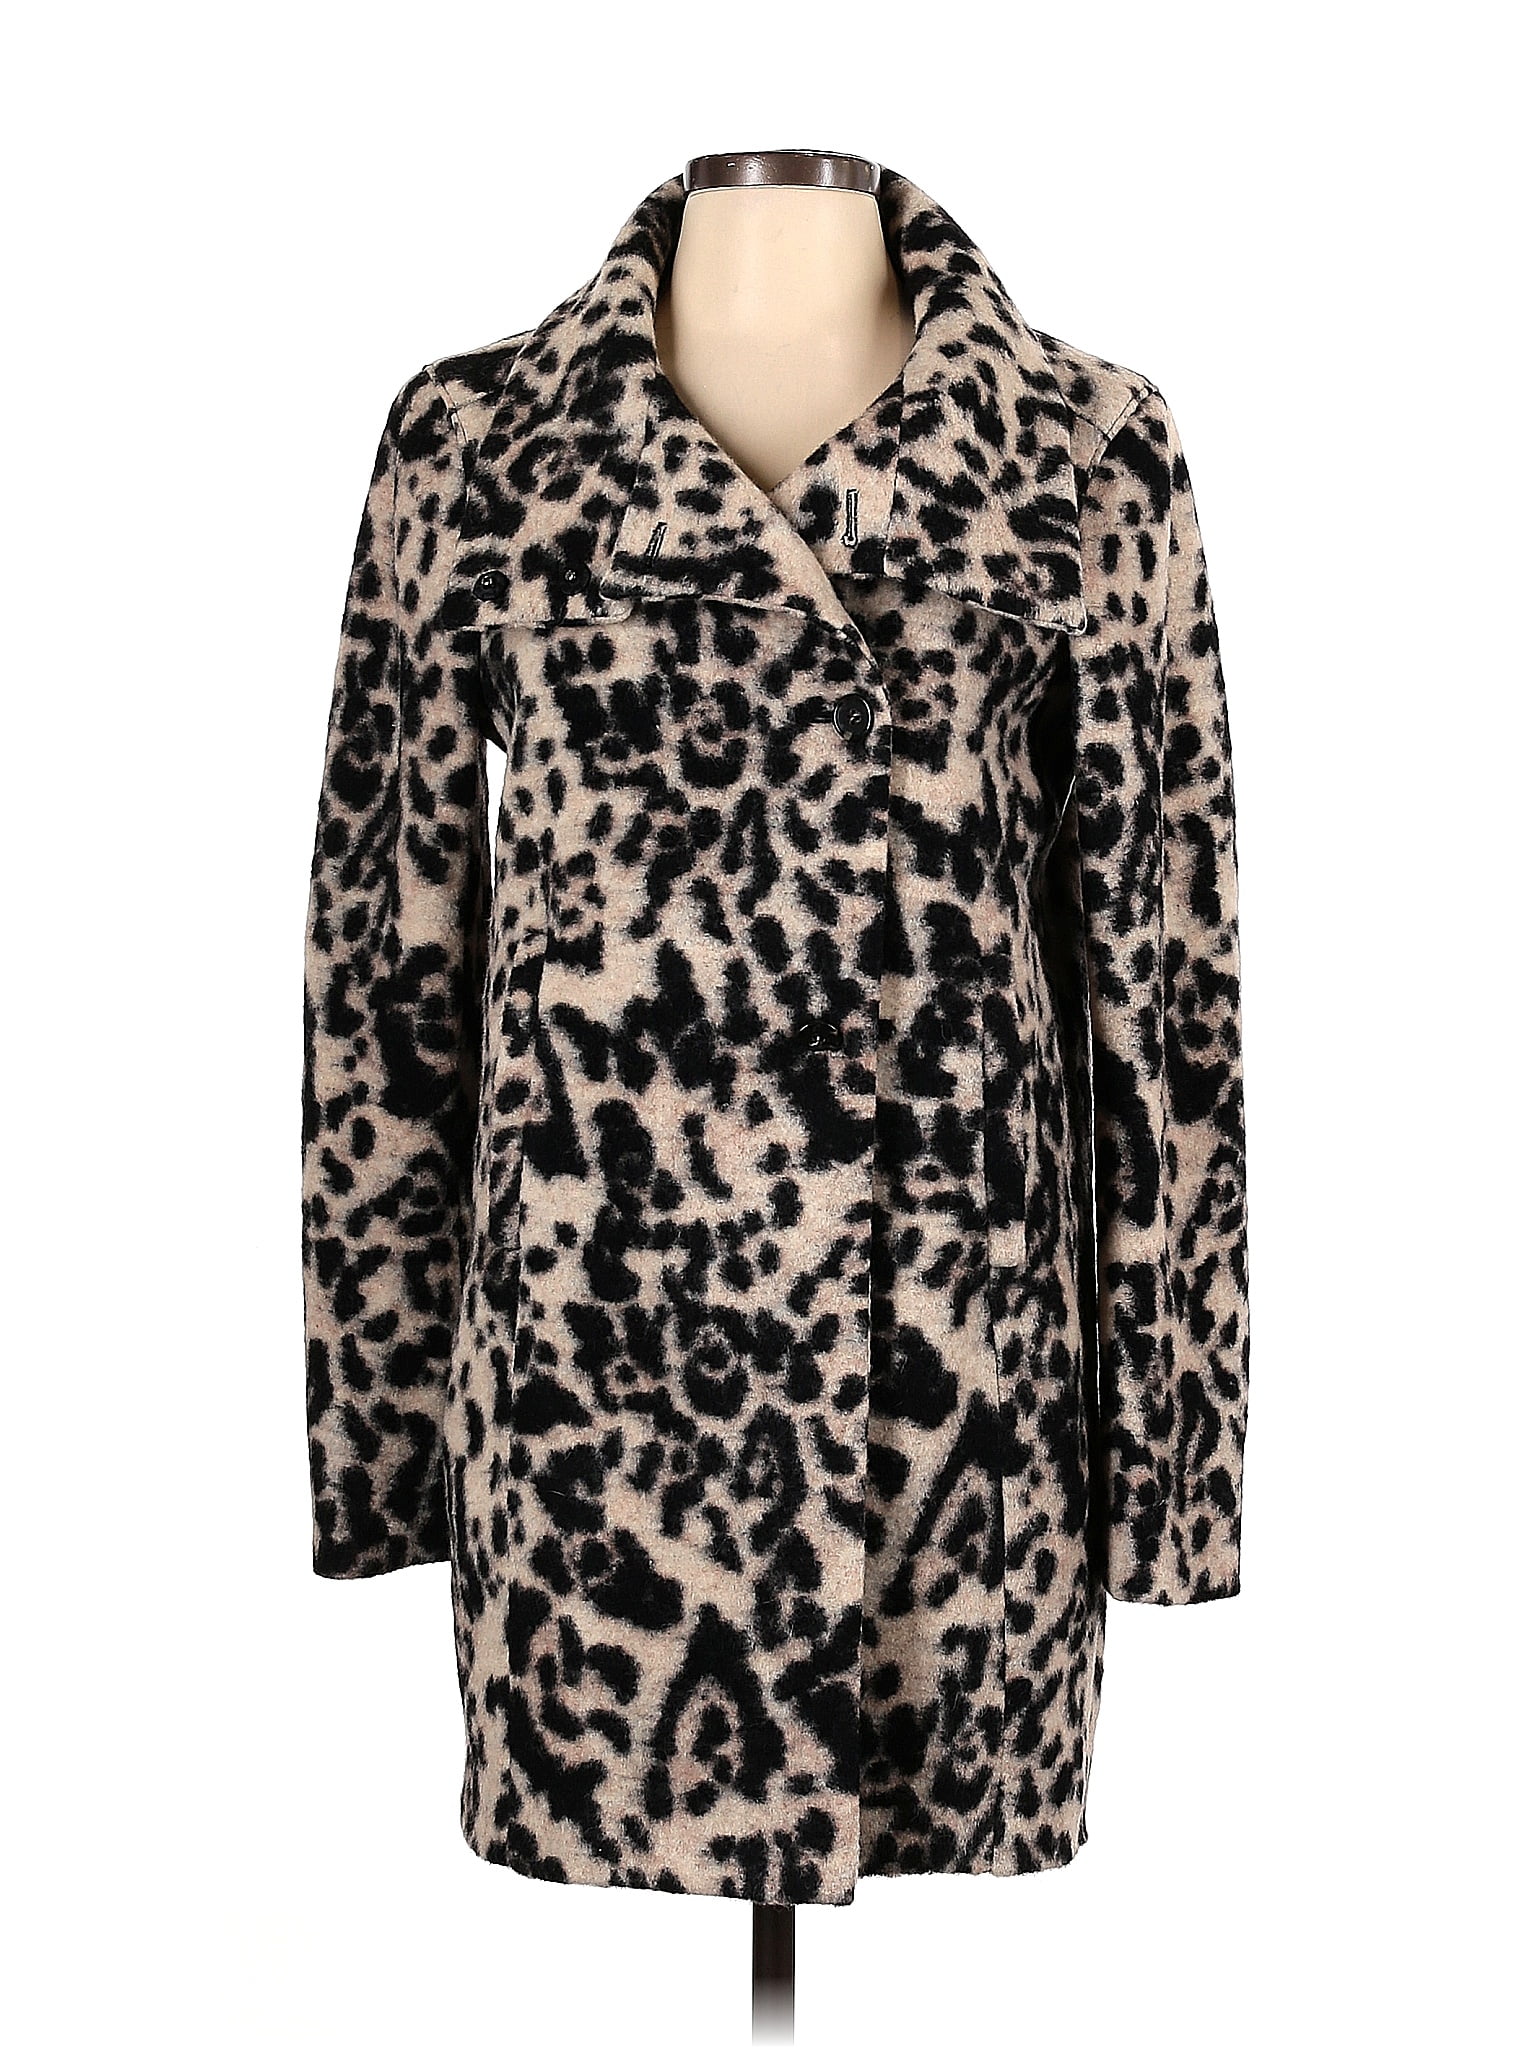 Ann Taylor Leopard Print Ivory Wool Coat Size XS - 79% off | thredUP